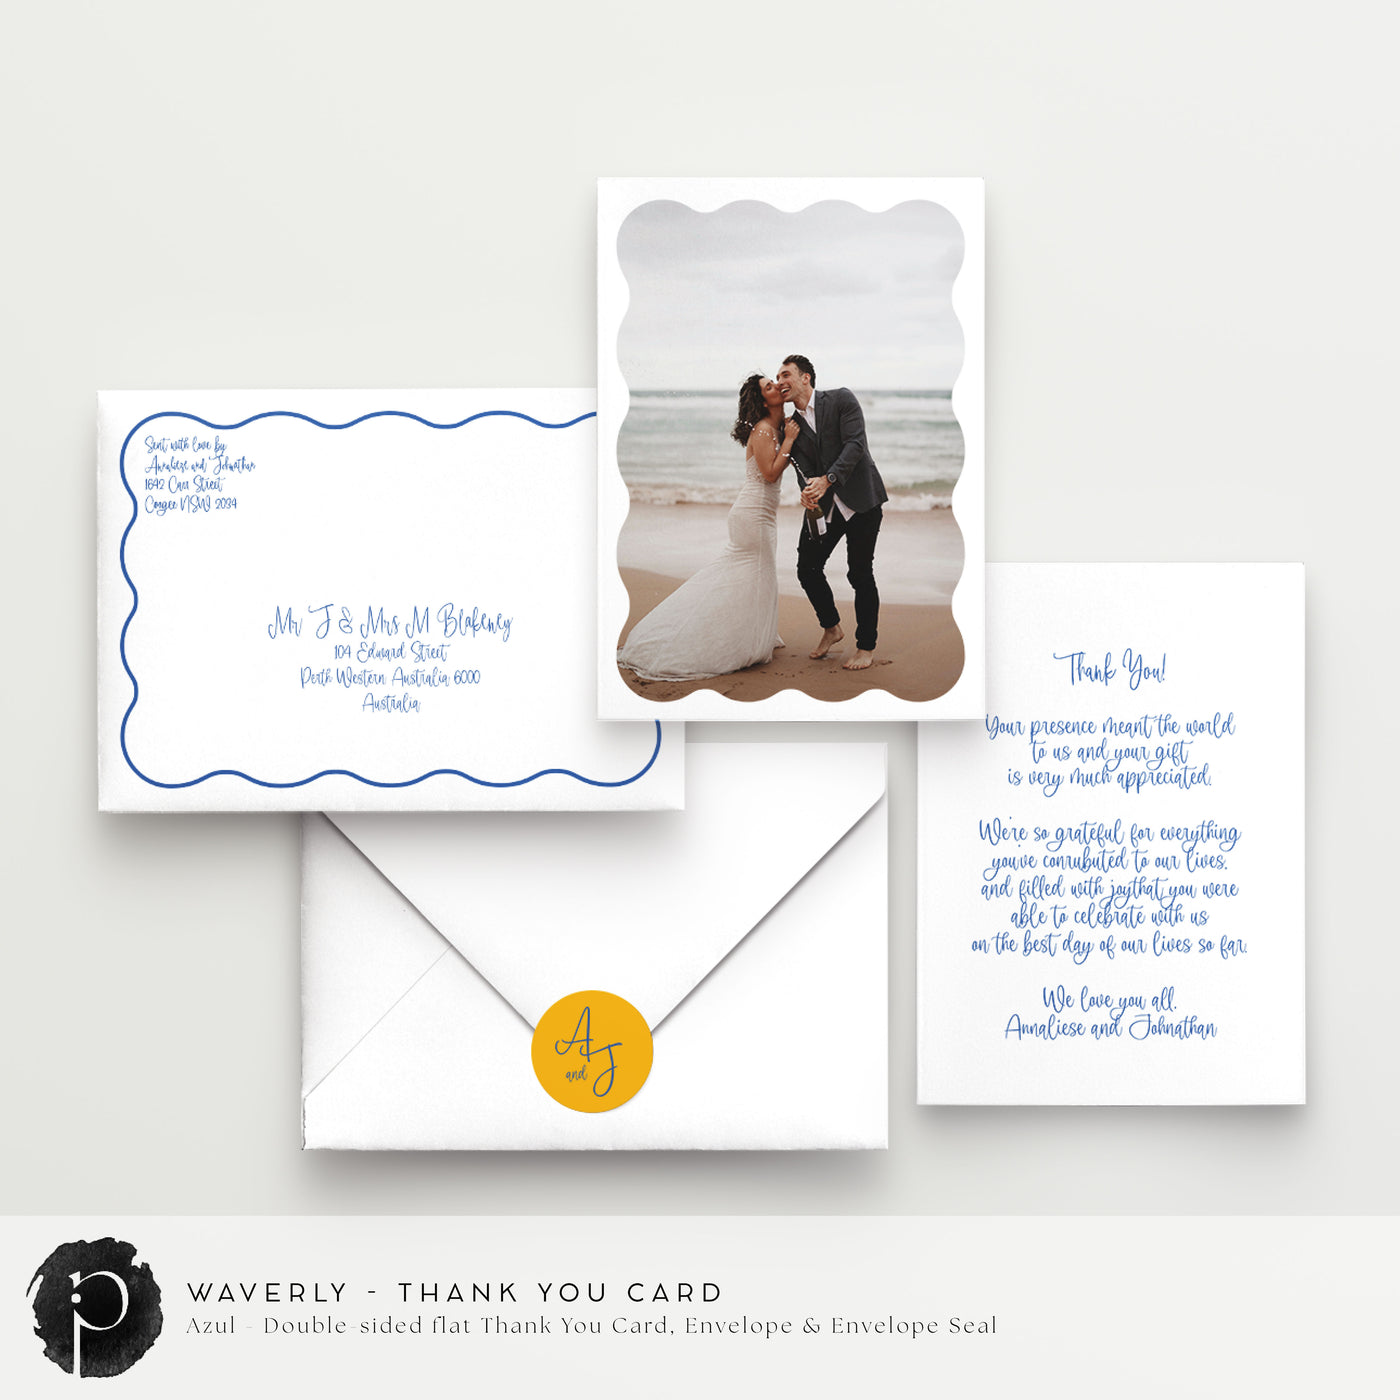 Waverly - Wedding Thank You Cards